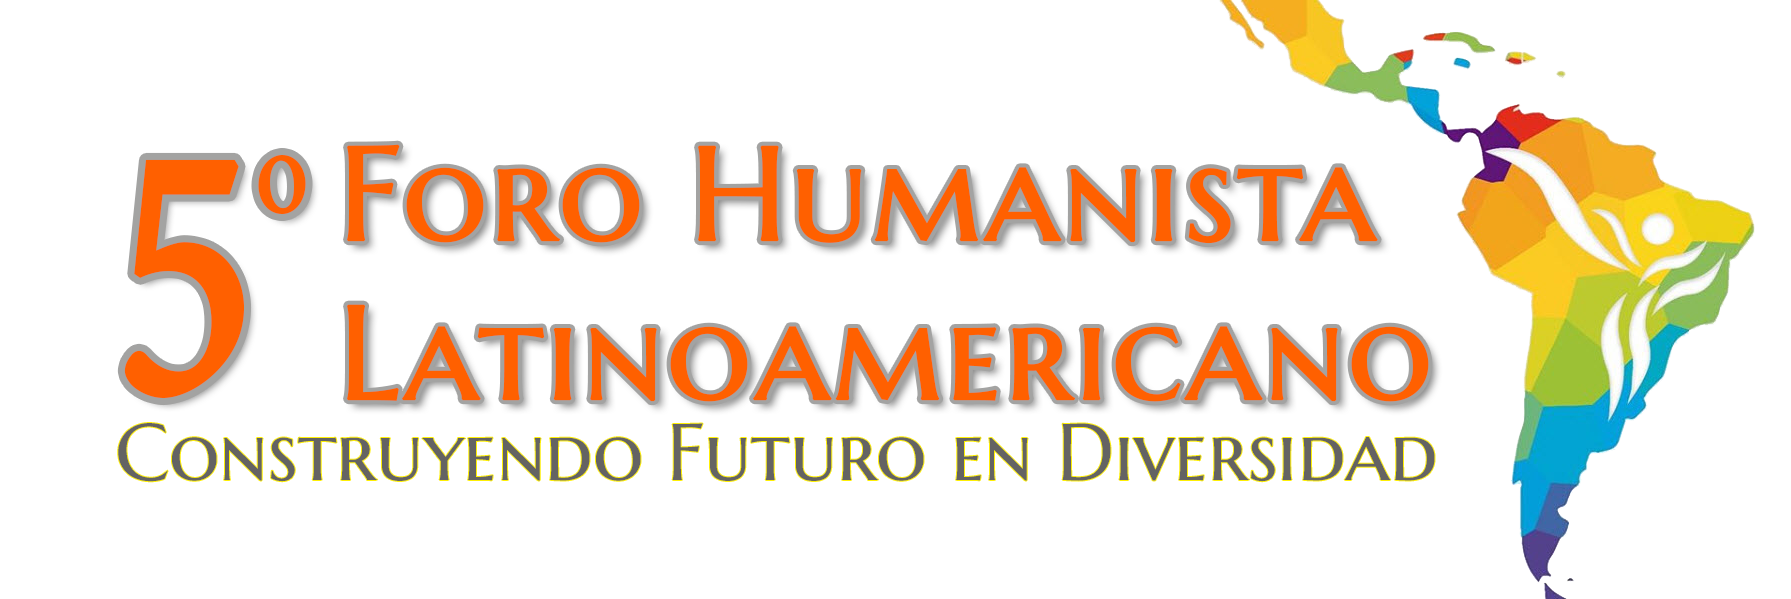 Foro Humanista Latinoamericano